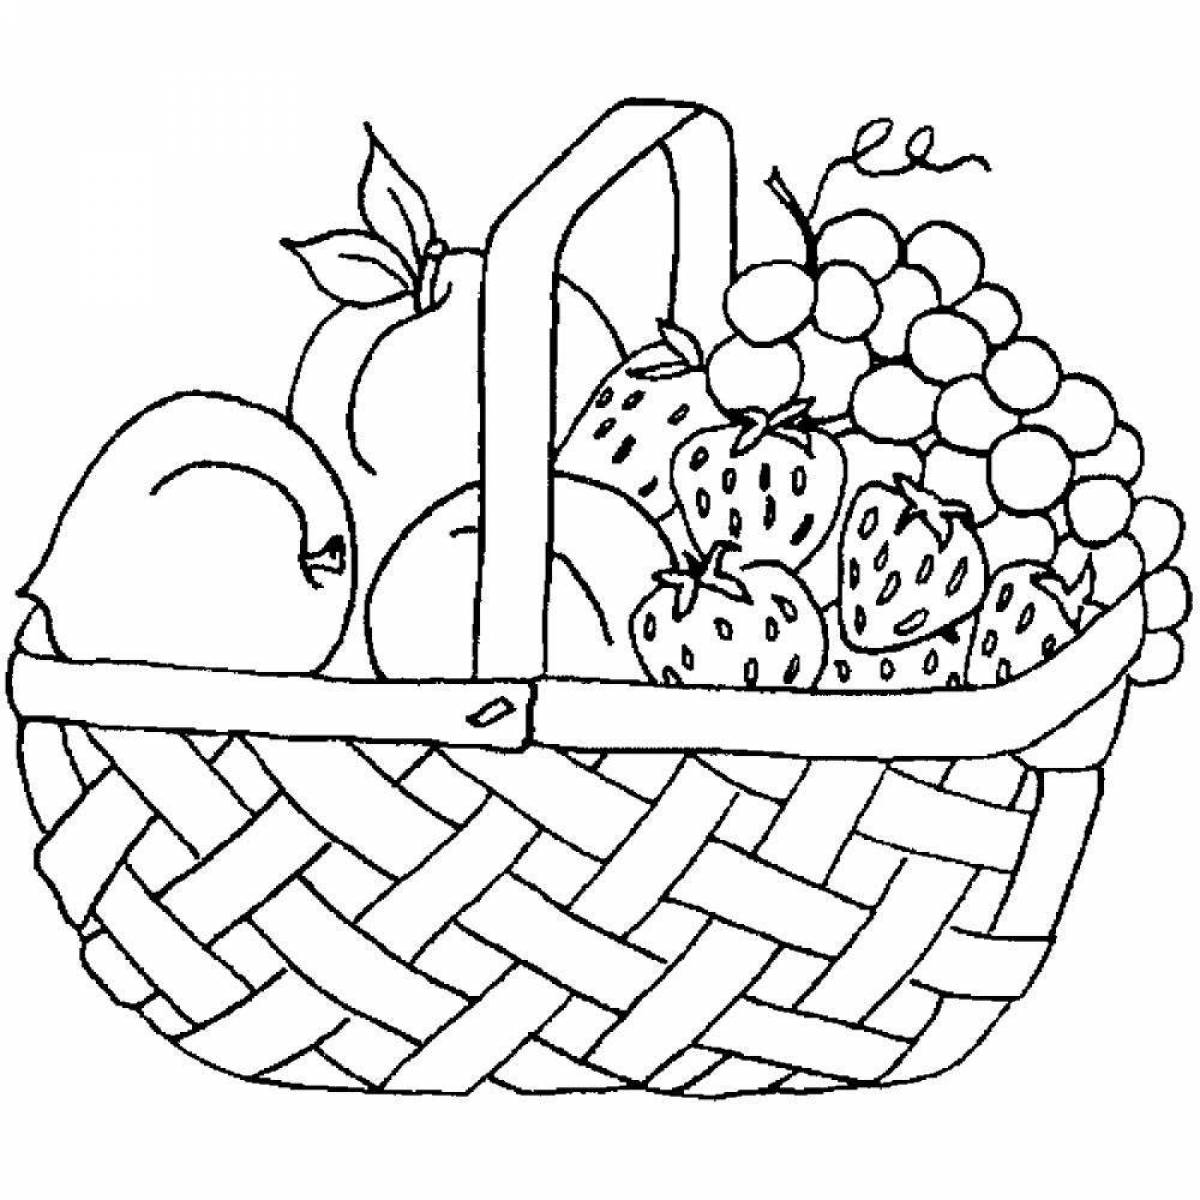 Fruit basket #3